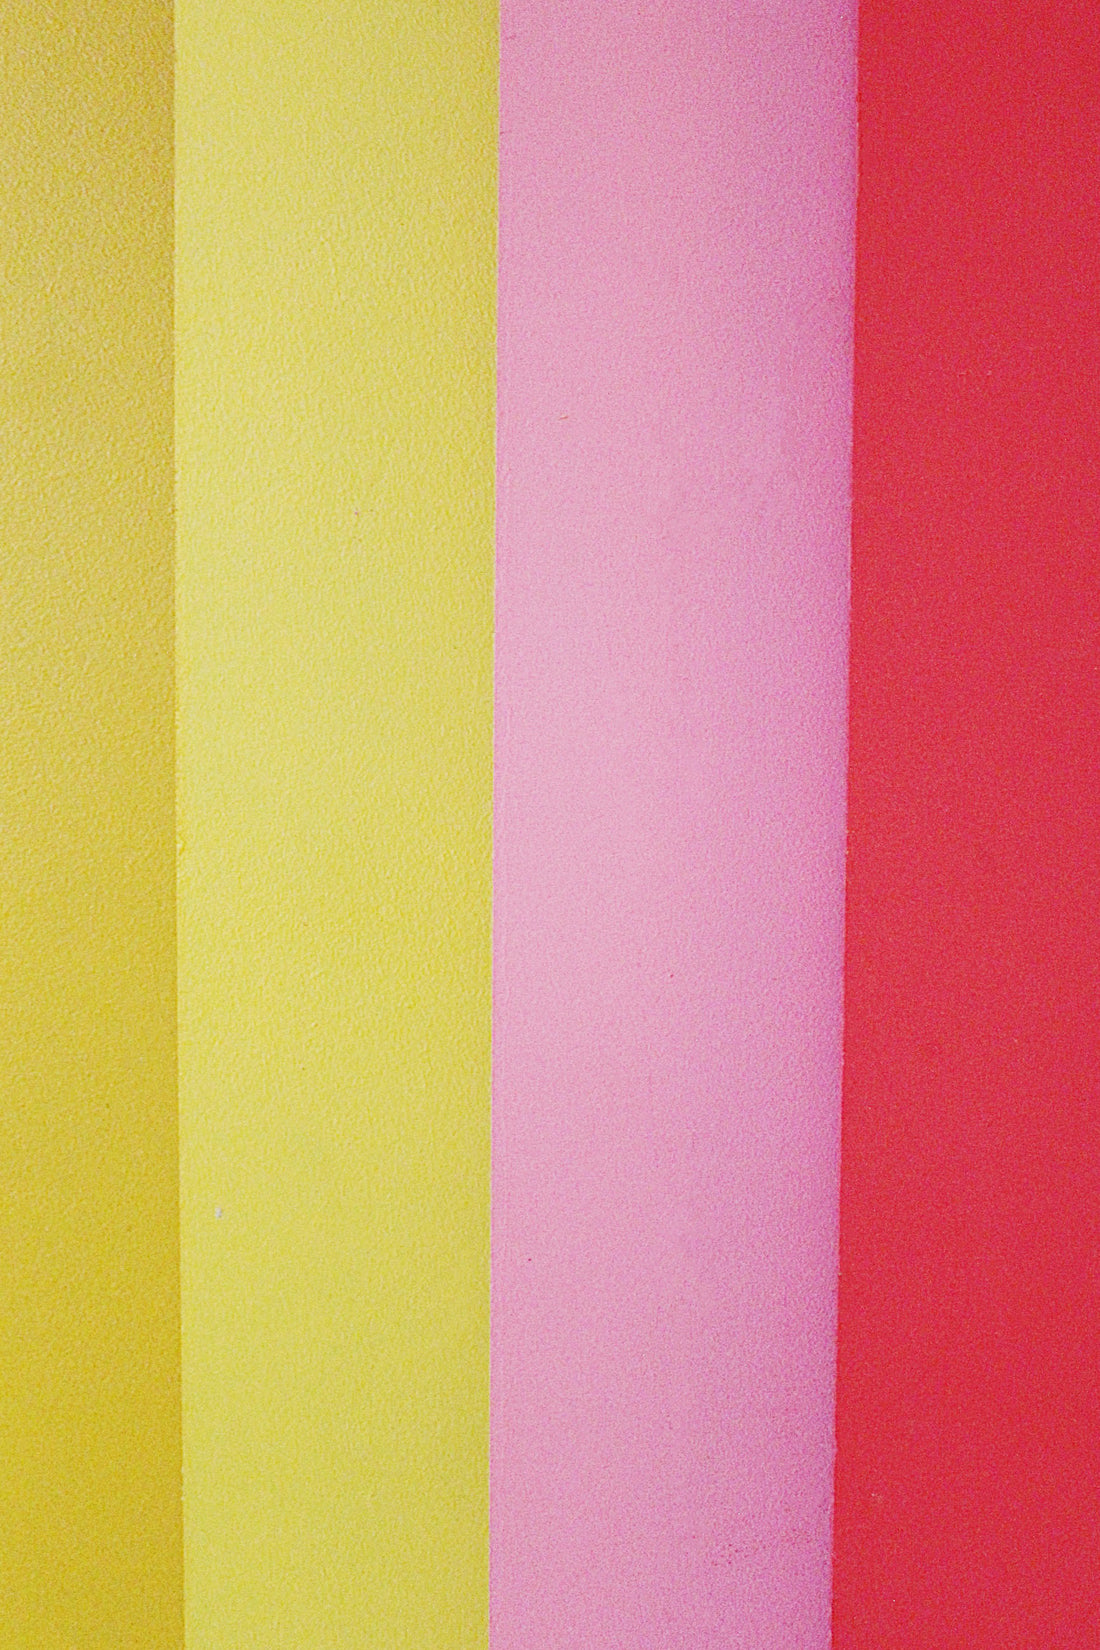 Coloured Panels